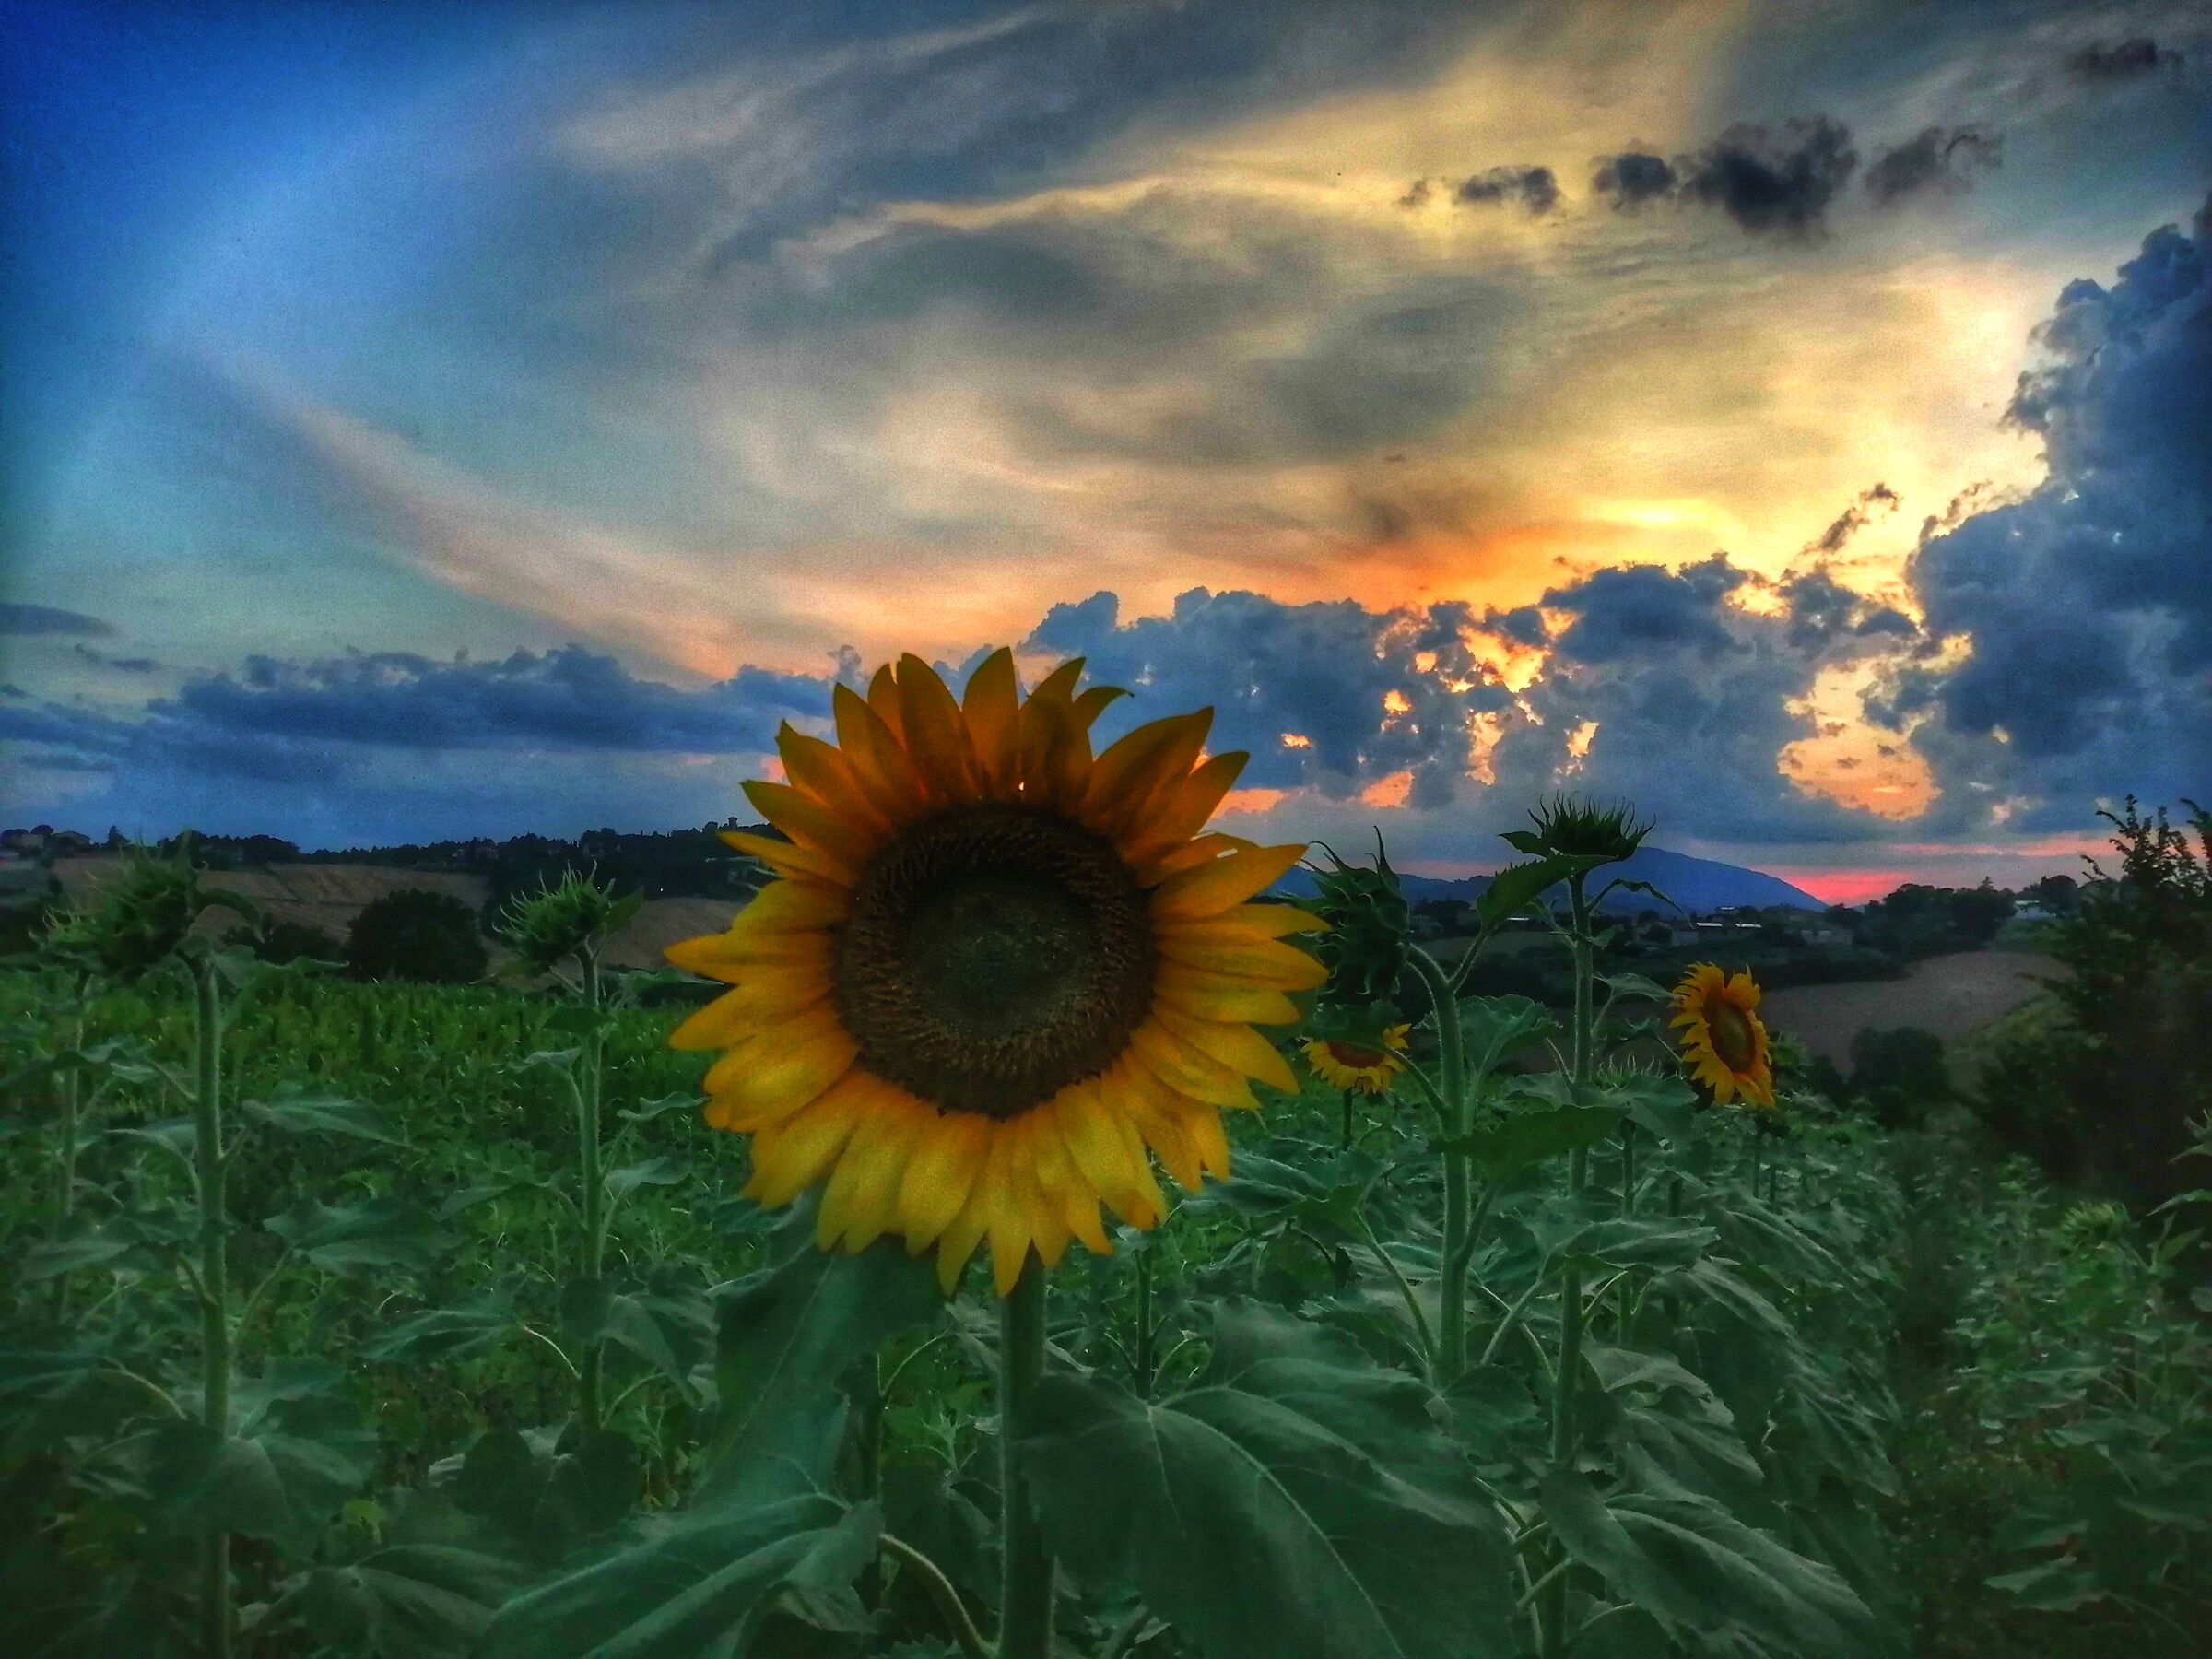 Sunflower and sunset...